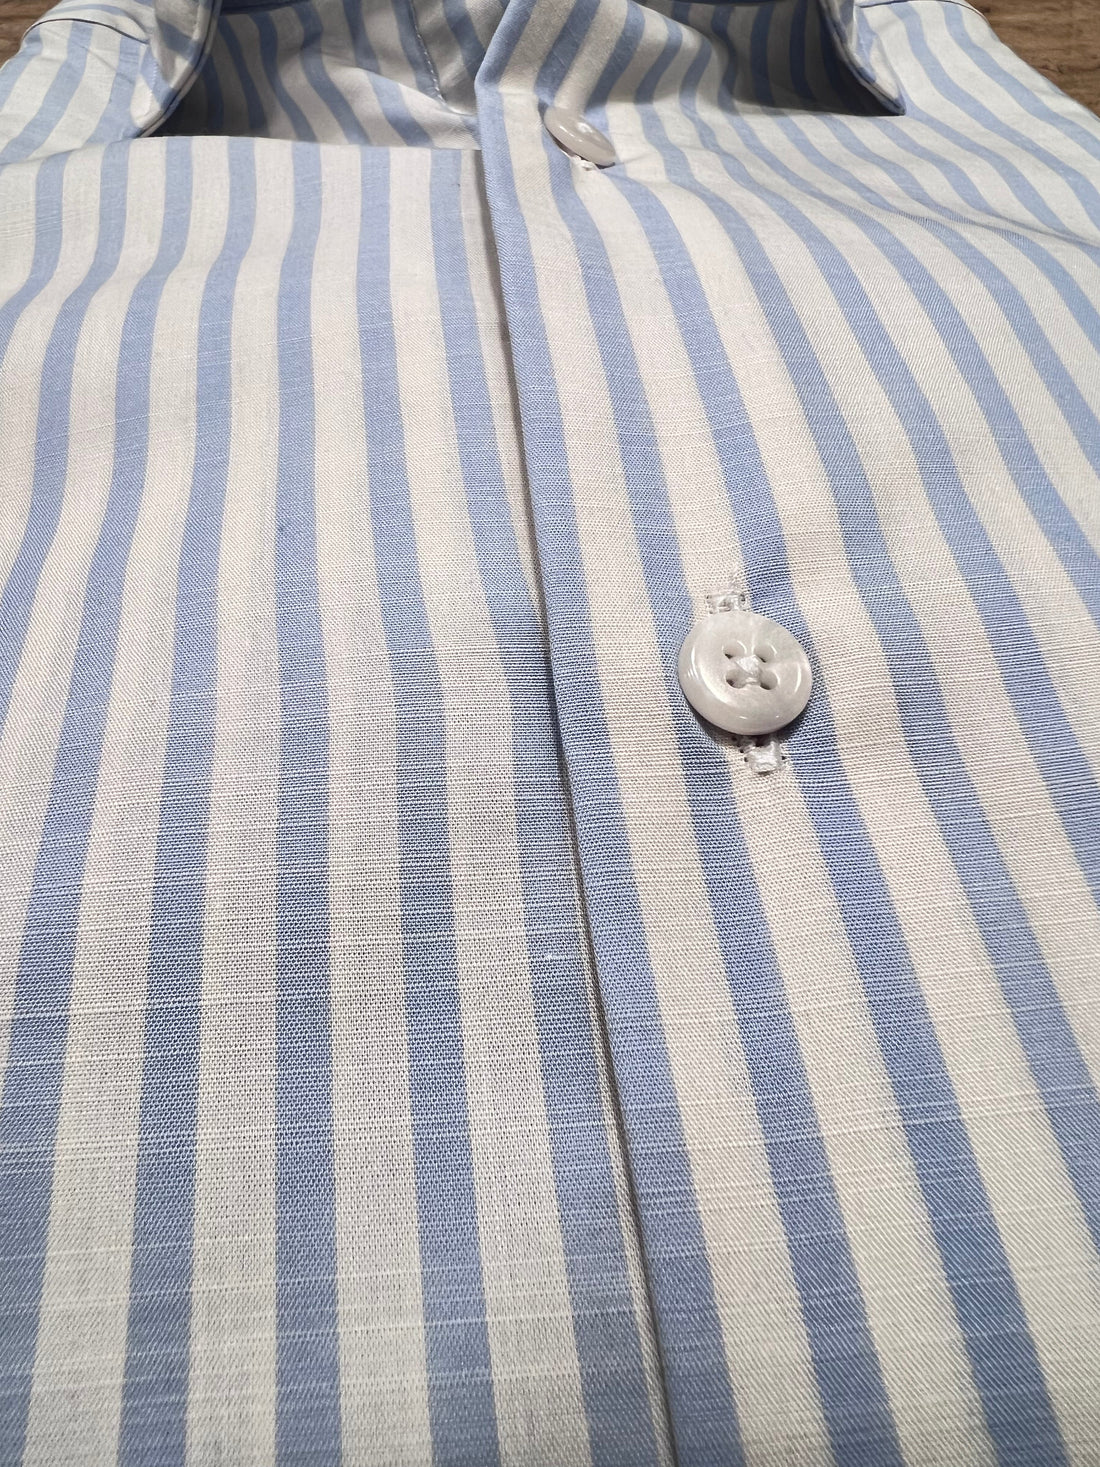 Light cream and baby blue striped shirt